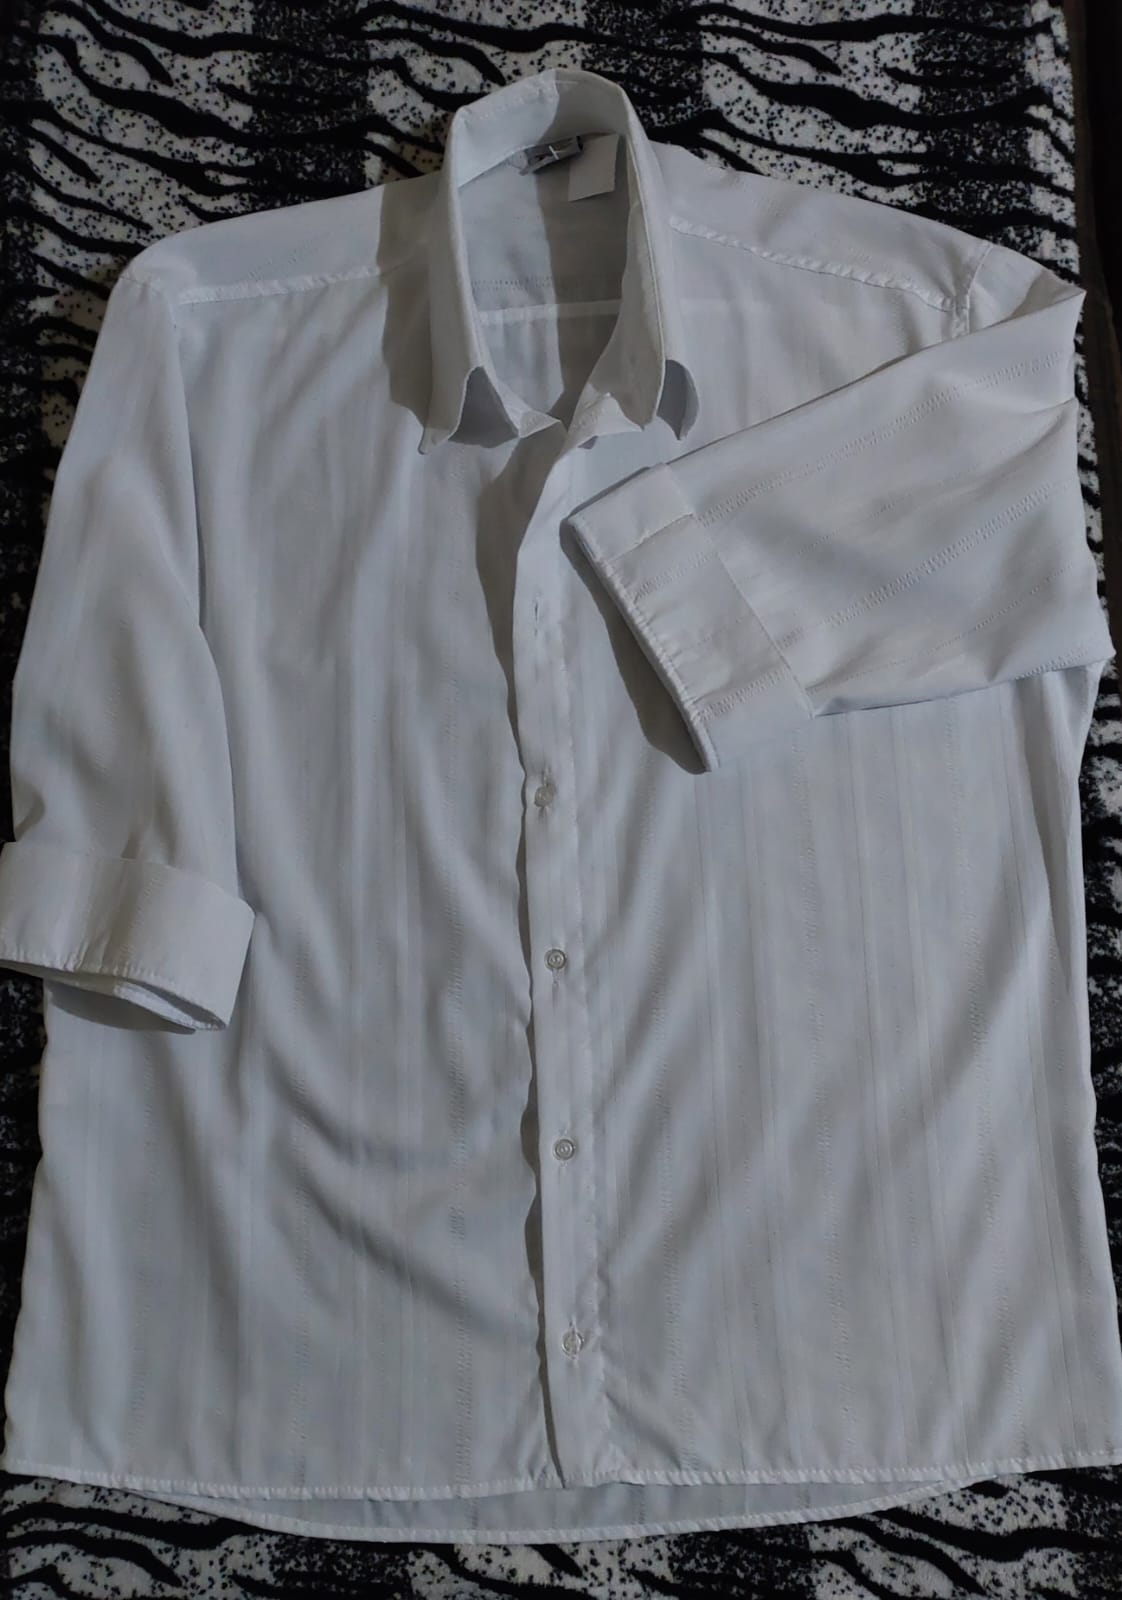 COD: 10421L – Camisa feminina branca, em poliéster, marca  MX 72, mangas 3/4, tamanho G, seminova